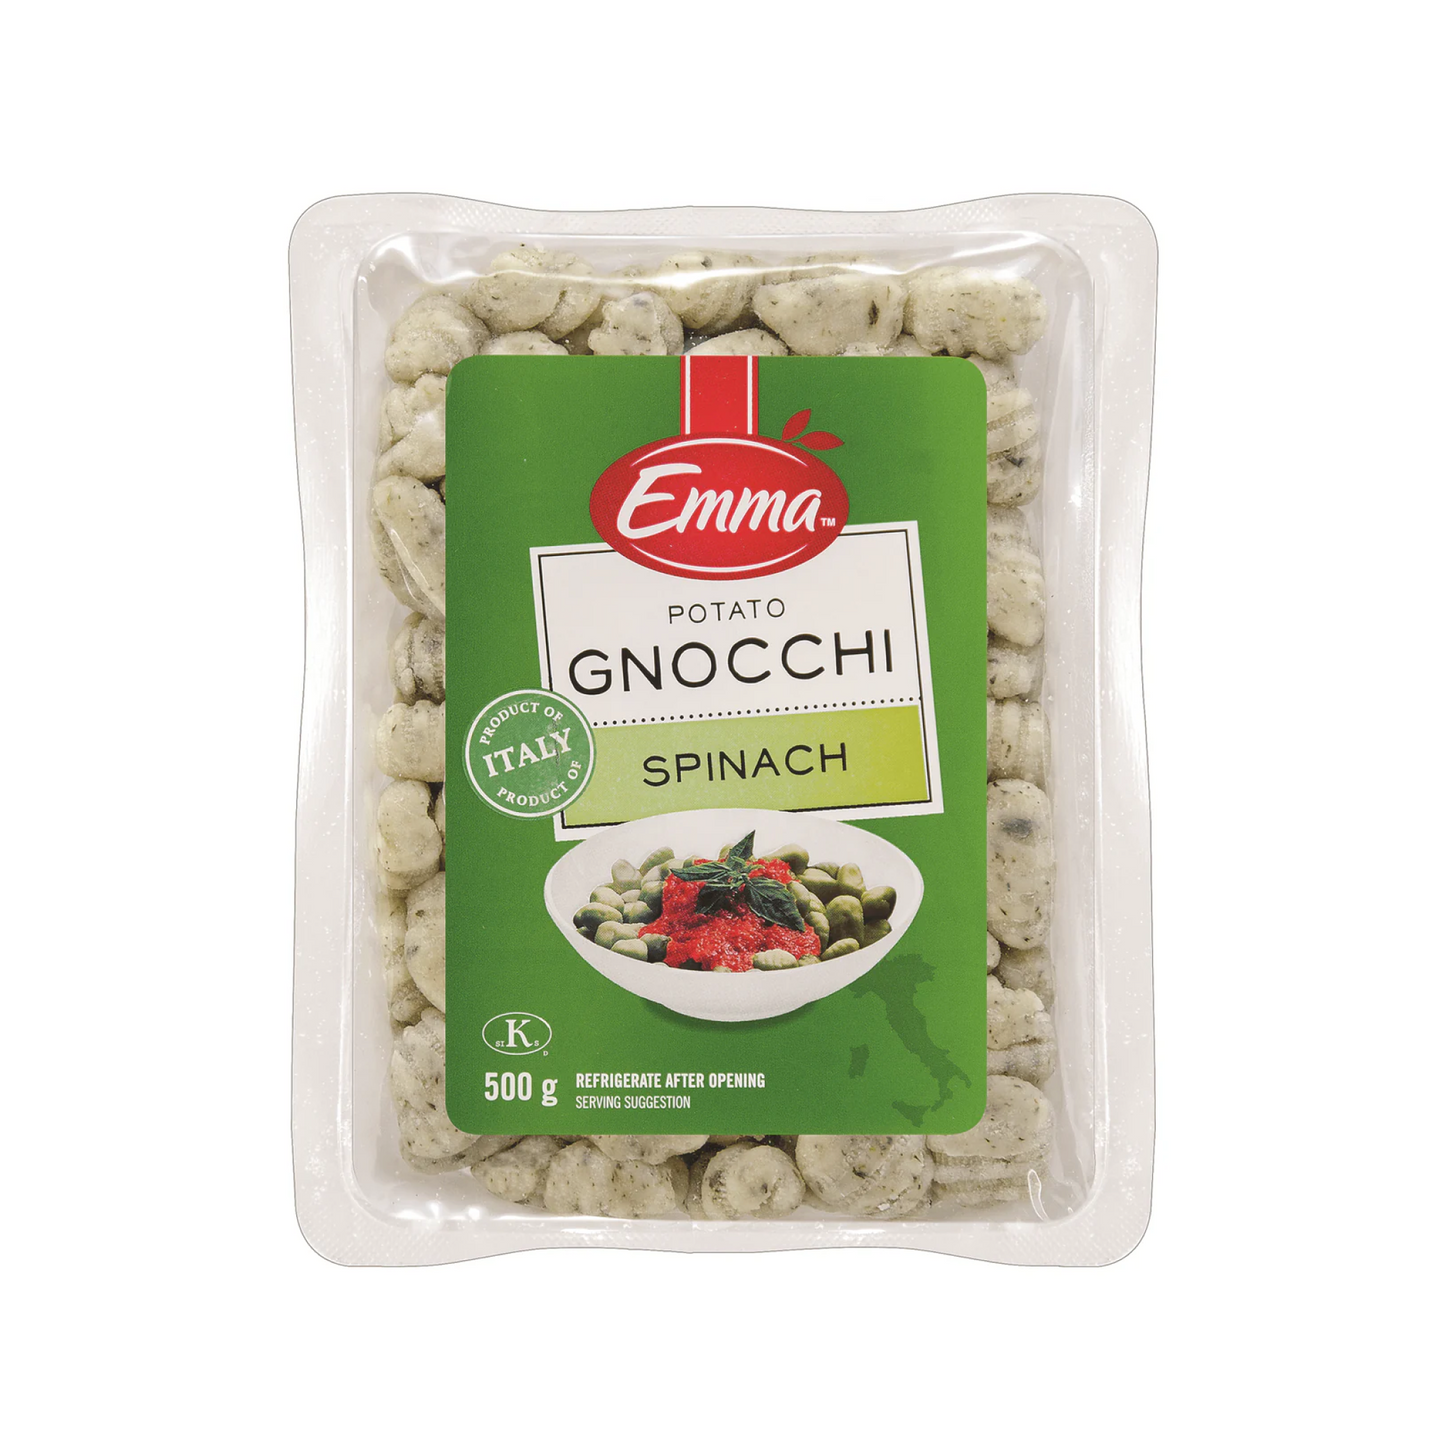 Emma Potato Gnocchi with Spinach 500g